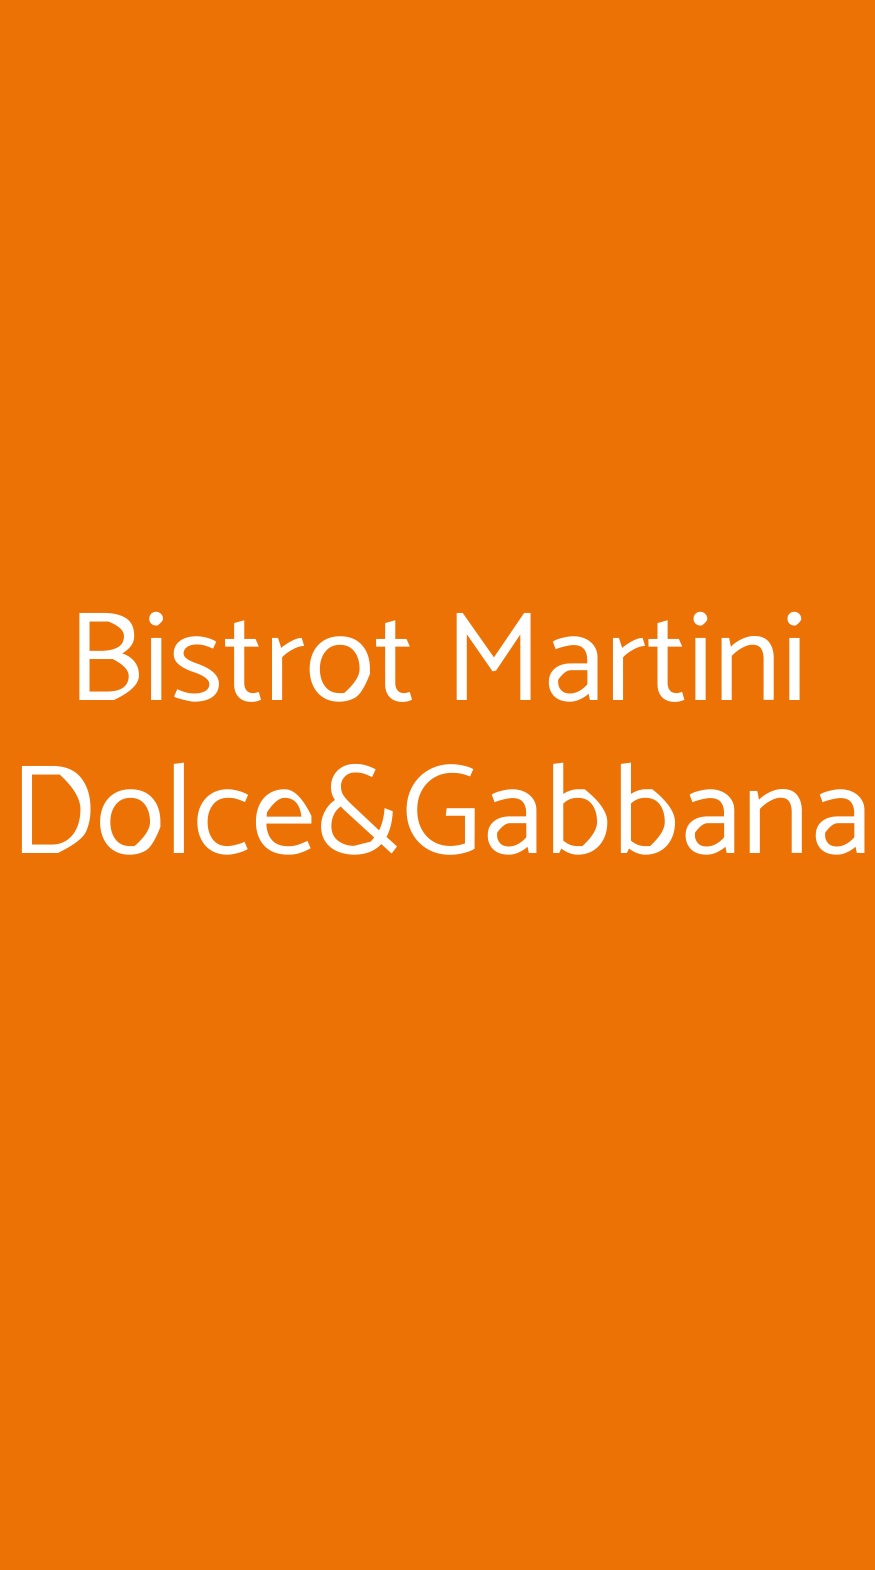 Bistrot Martini Dolce&Gabbana Milano menù 1 pagina